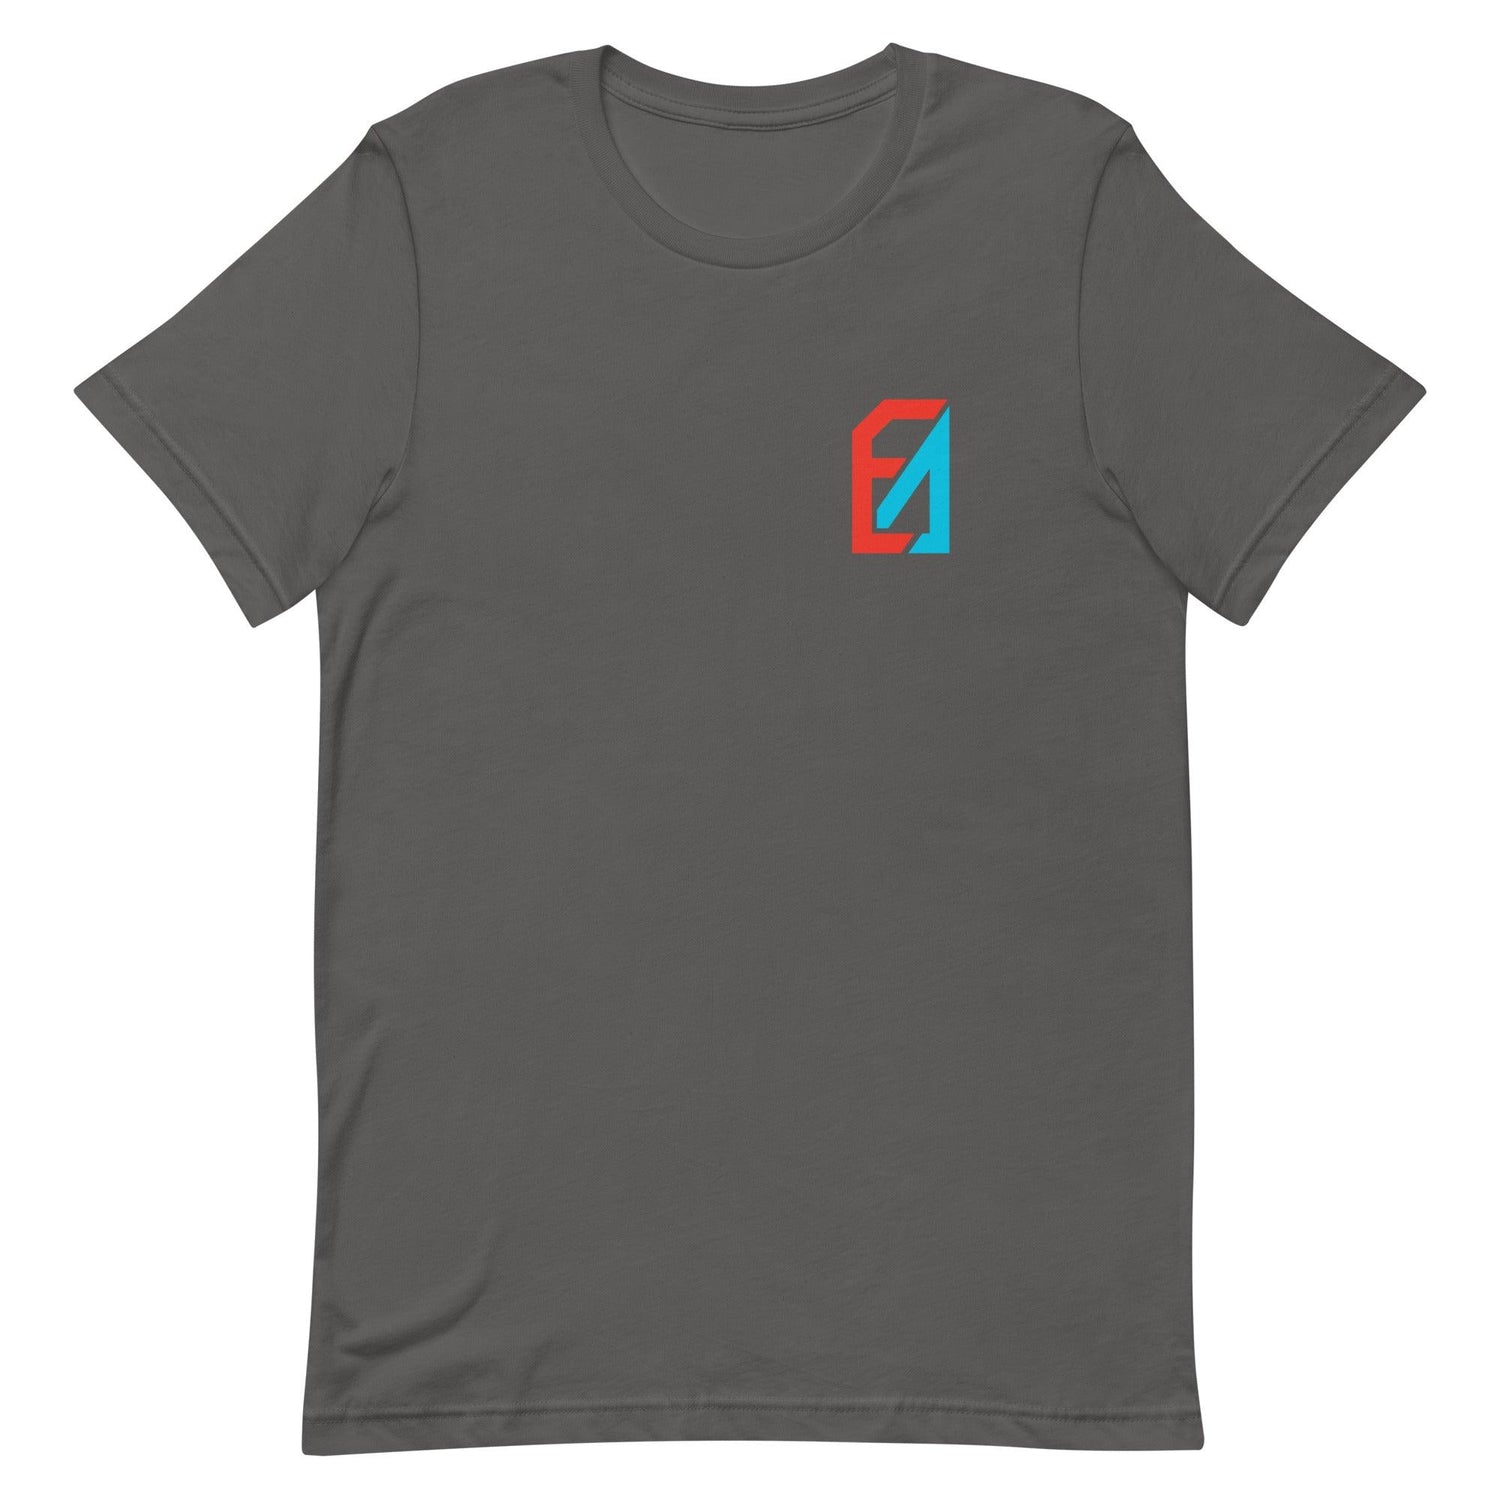 Elijah Brown "Essentials" t-shirt - Fan Arch